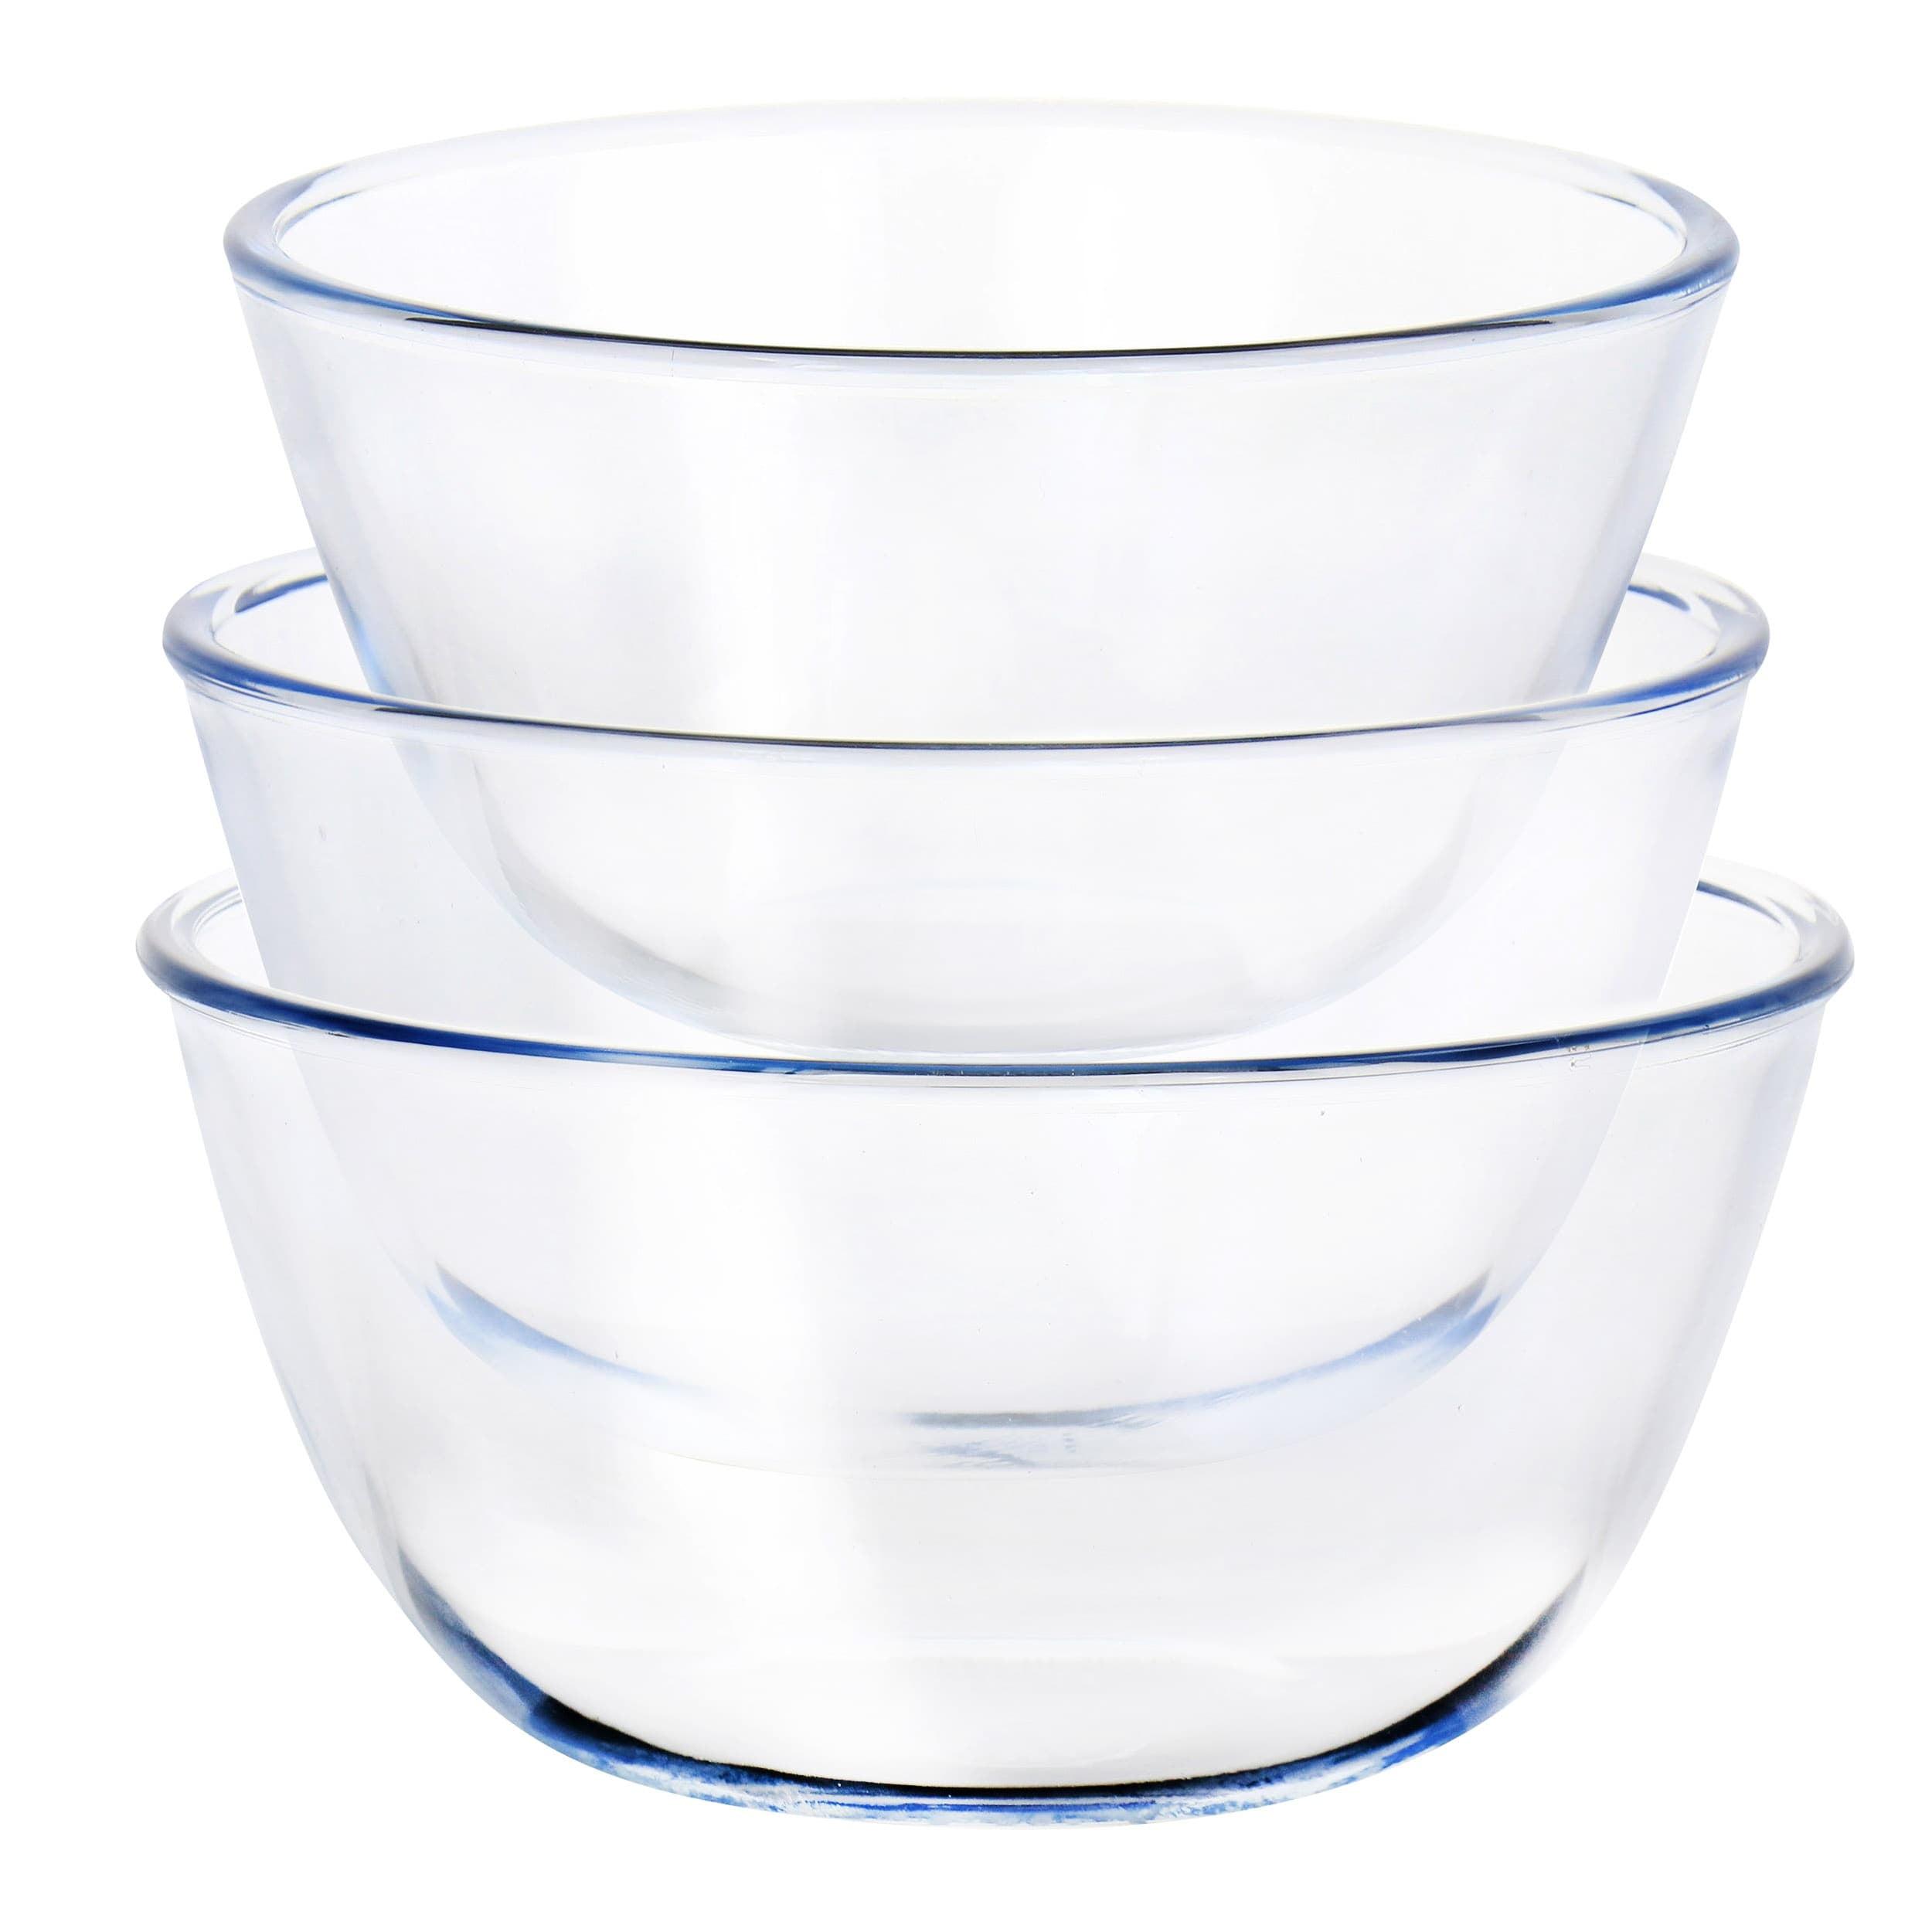 MARTHA STEWART 4-Piece Glass Nesting Mixing Bowl Set 985118708M